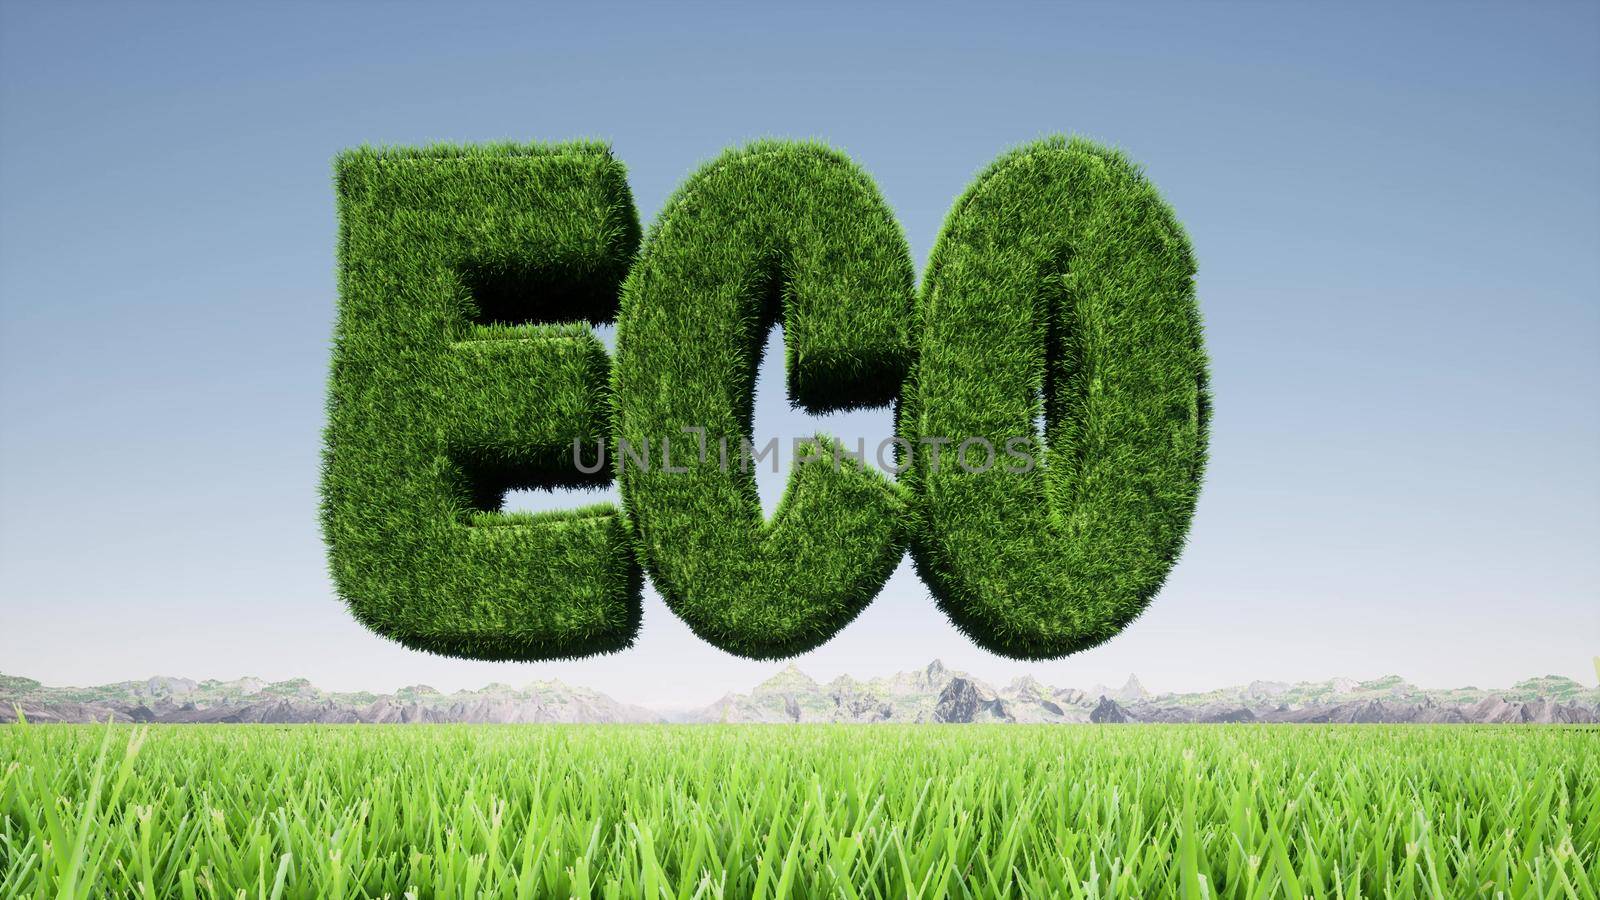 ECO sign grass Green planet Earth globe landscape 3d render